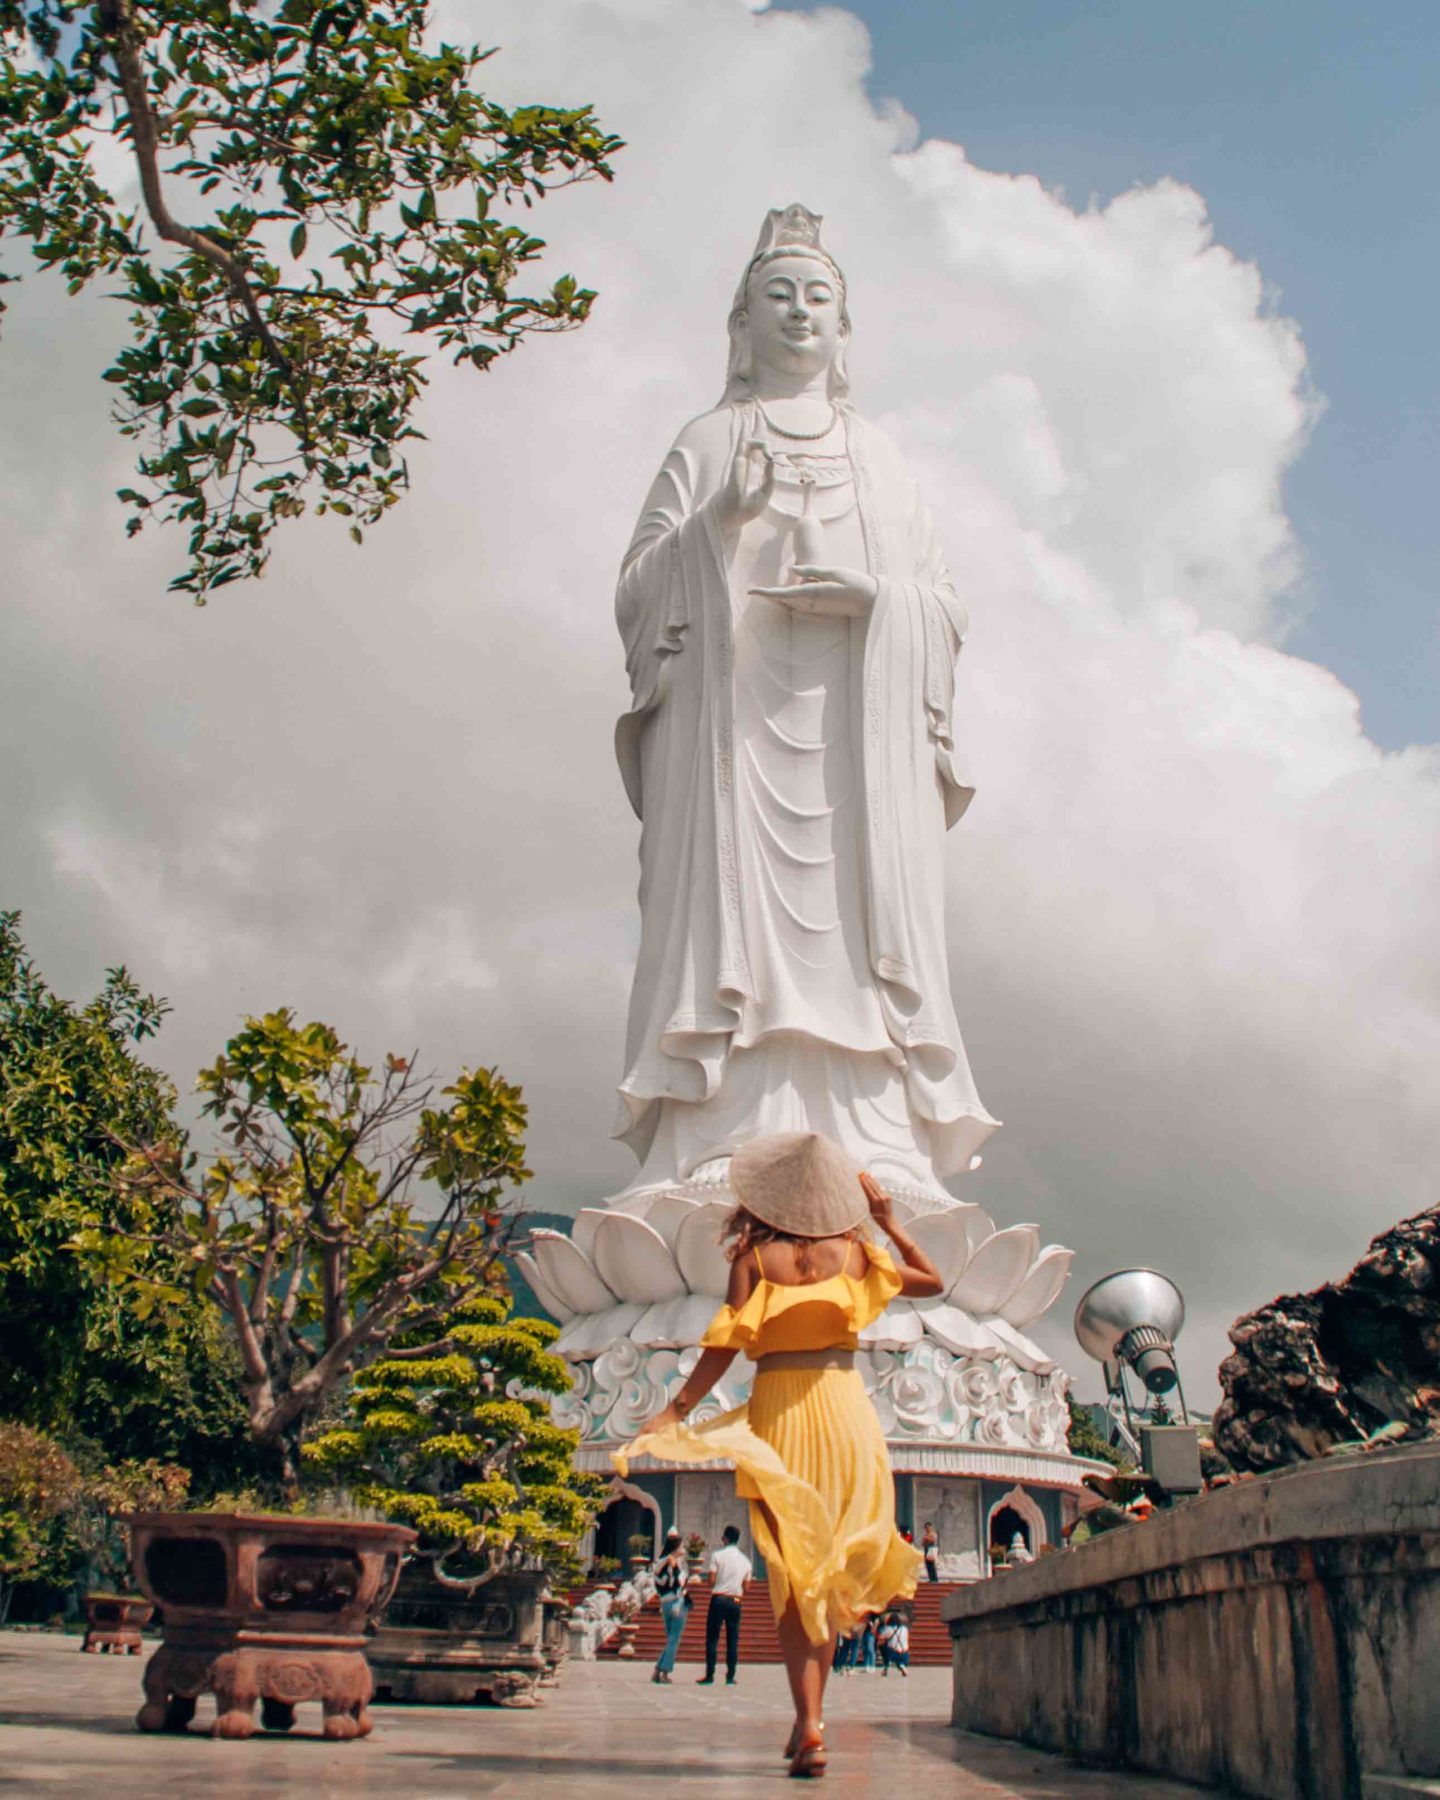 Lady Buddha from below, the tallest buddha statue of Vietnam